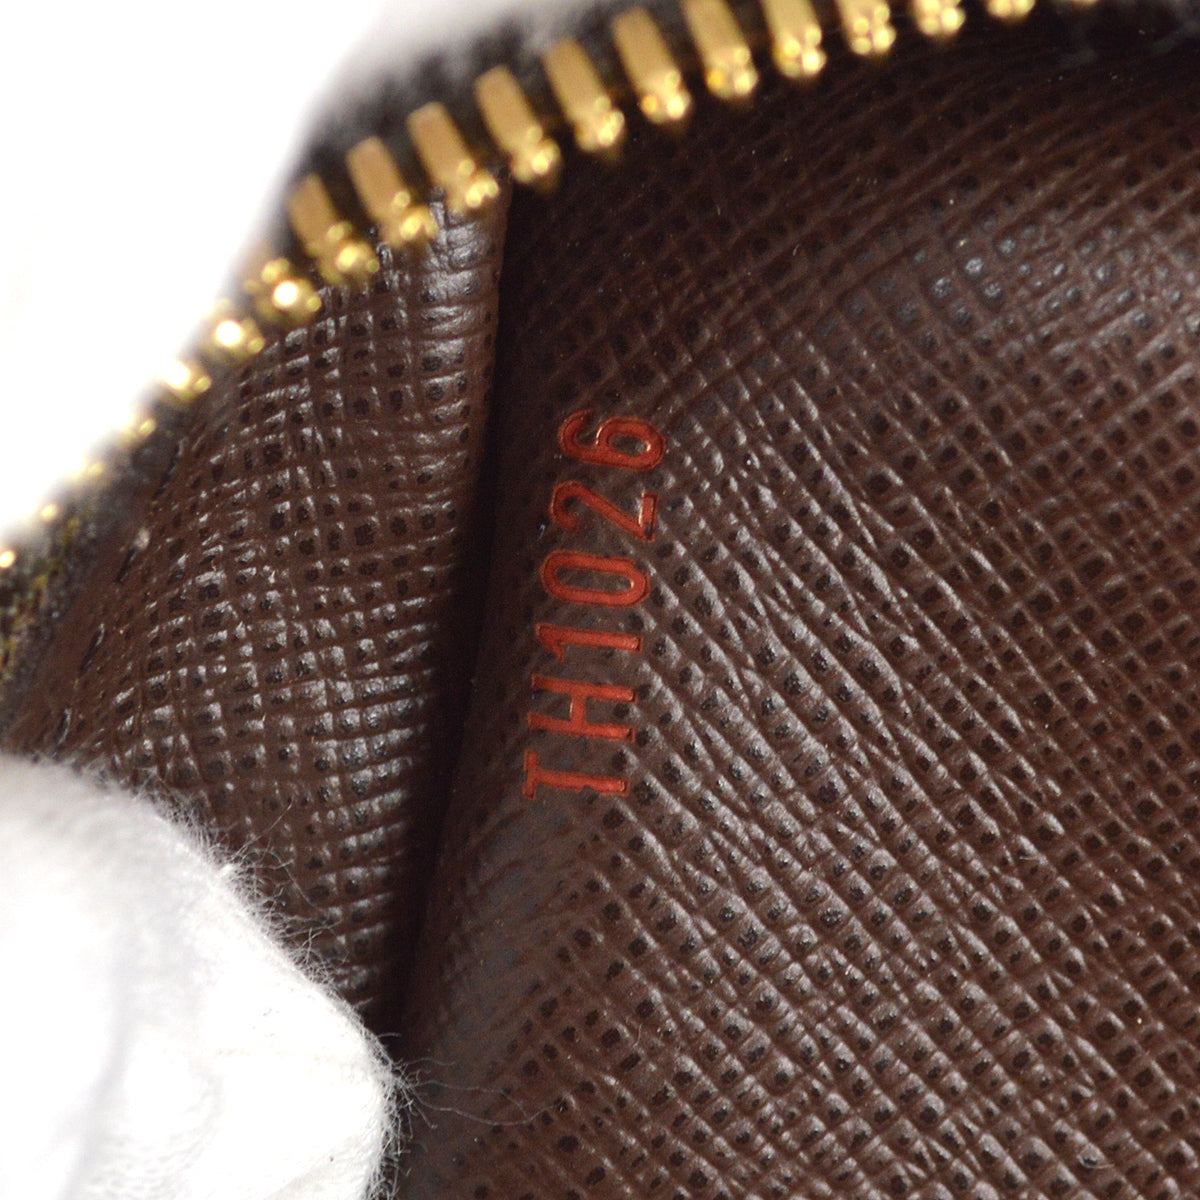 Louis Vuitton 2006 Damier Porte Documents Voyage Handbag N41124